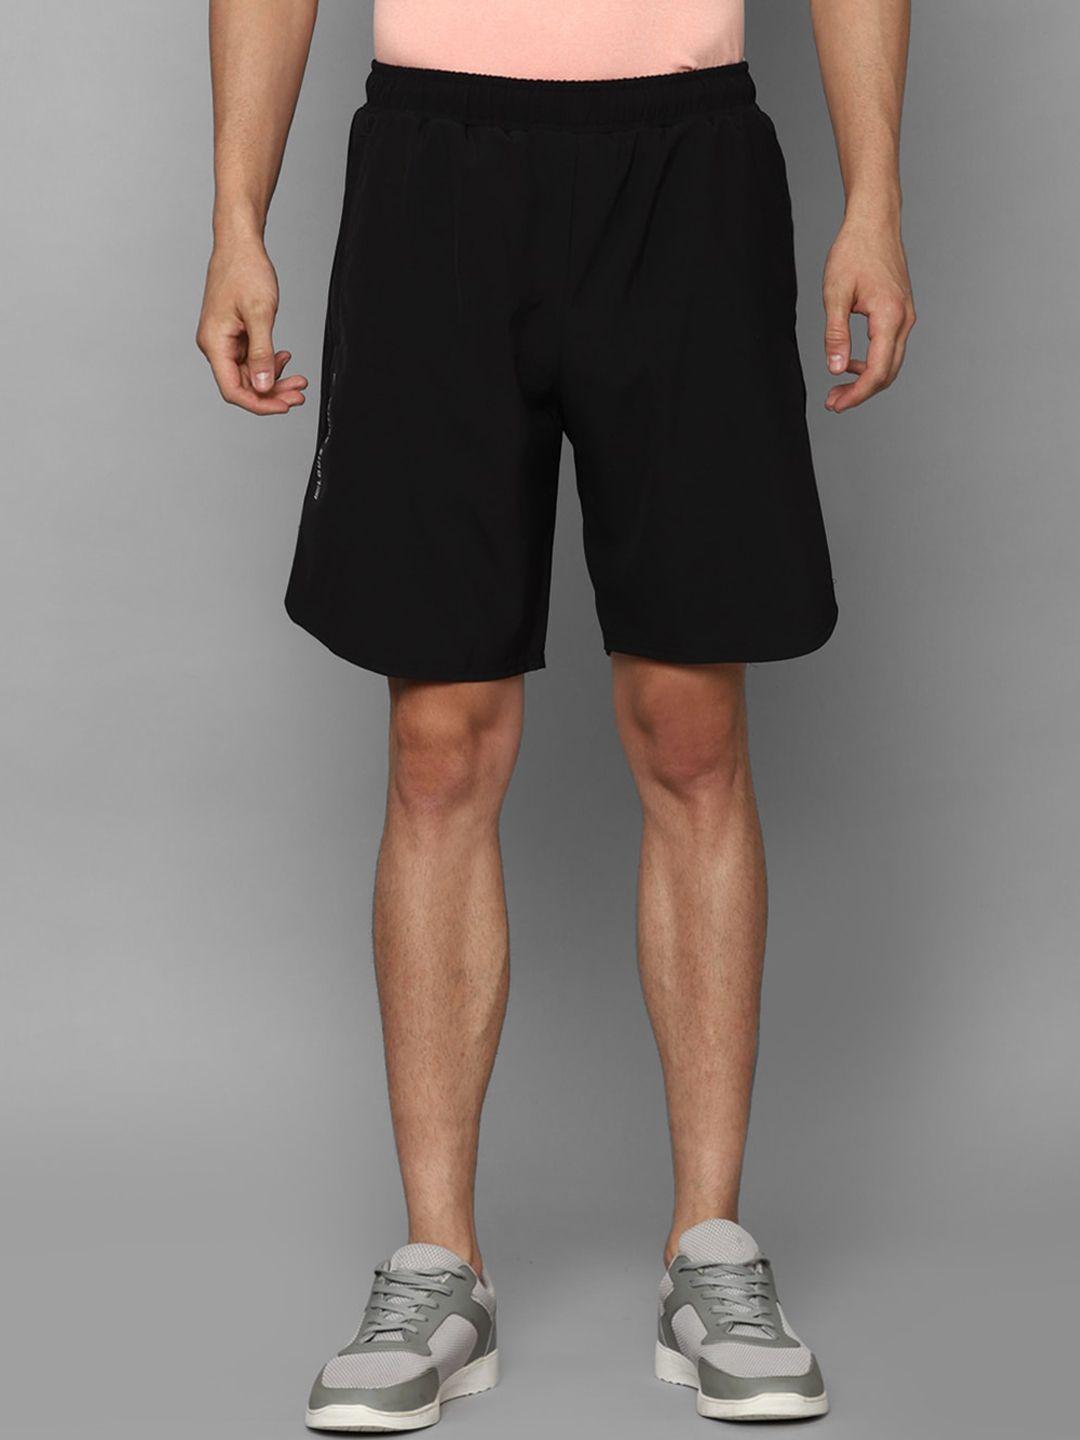 louis philippe men black slim fit sports shorts